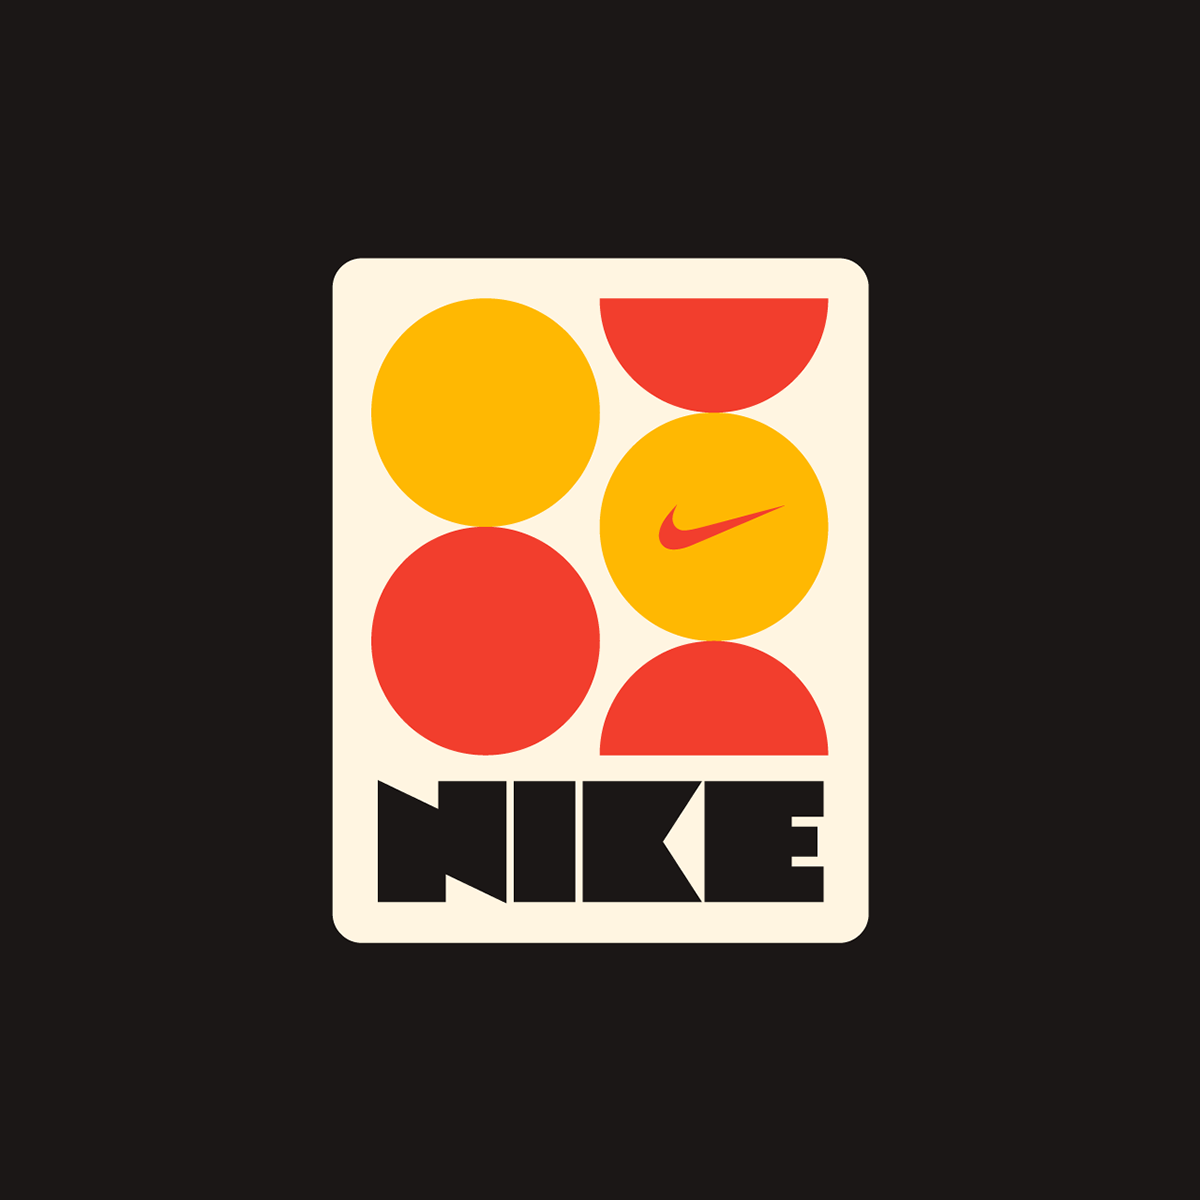 adidas dunkin google joker Mtv Netflix Nike Obi-Wan Kenobi pride Vans